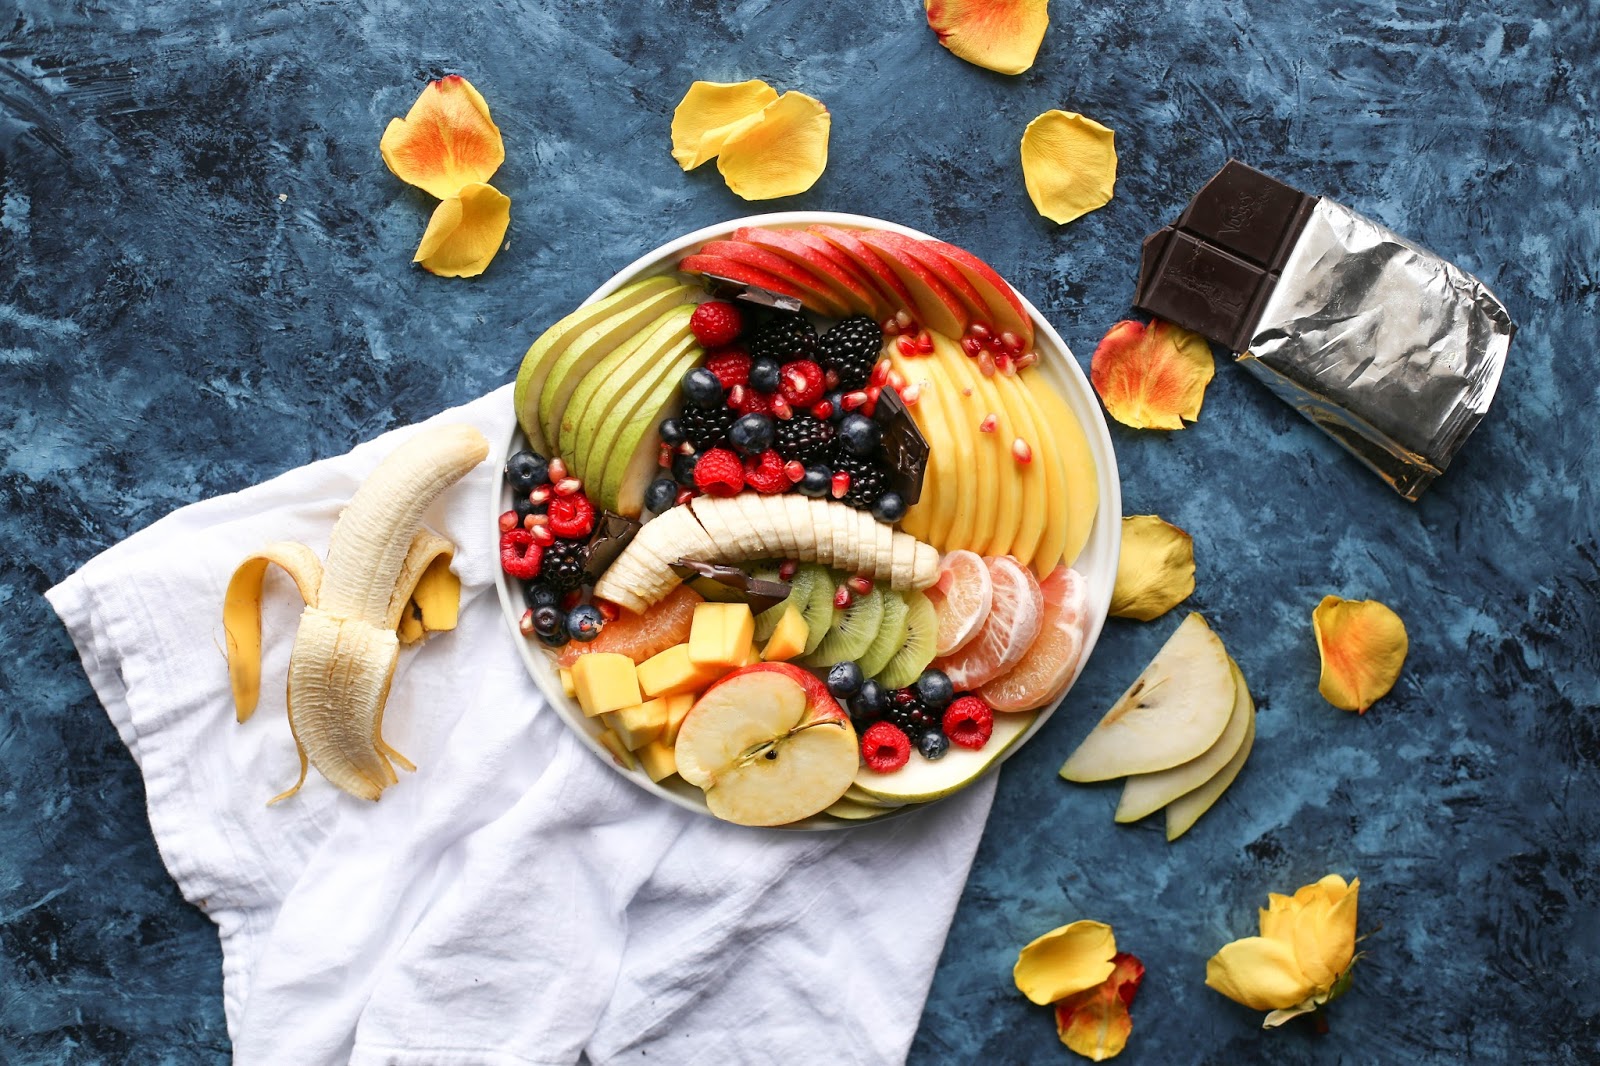 cheesymash: Creative Ways to Prepare Fruit for Healthy Desserts